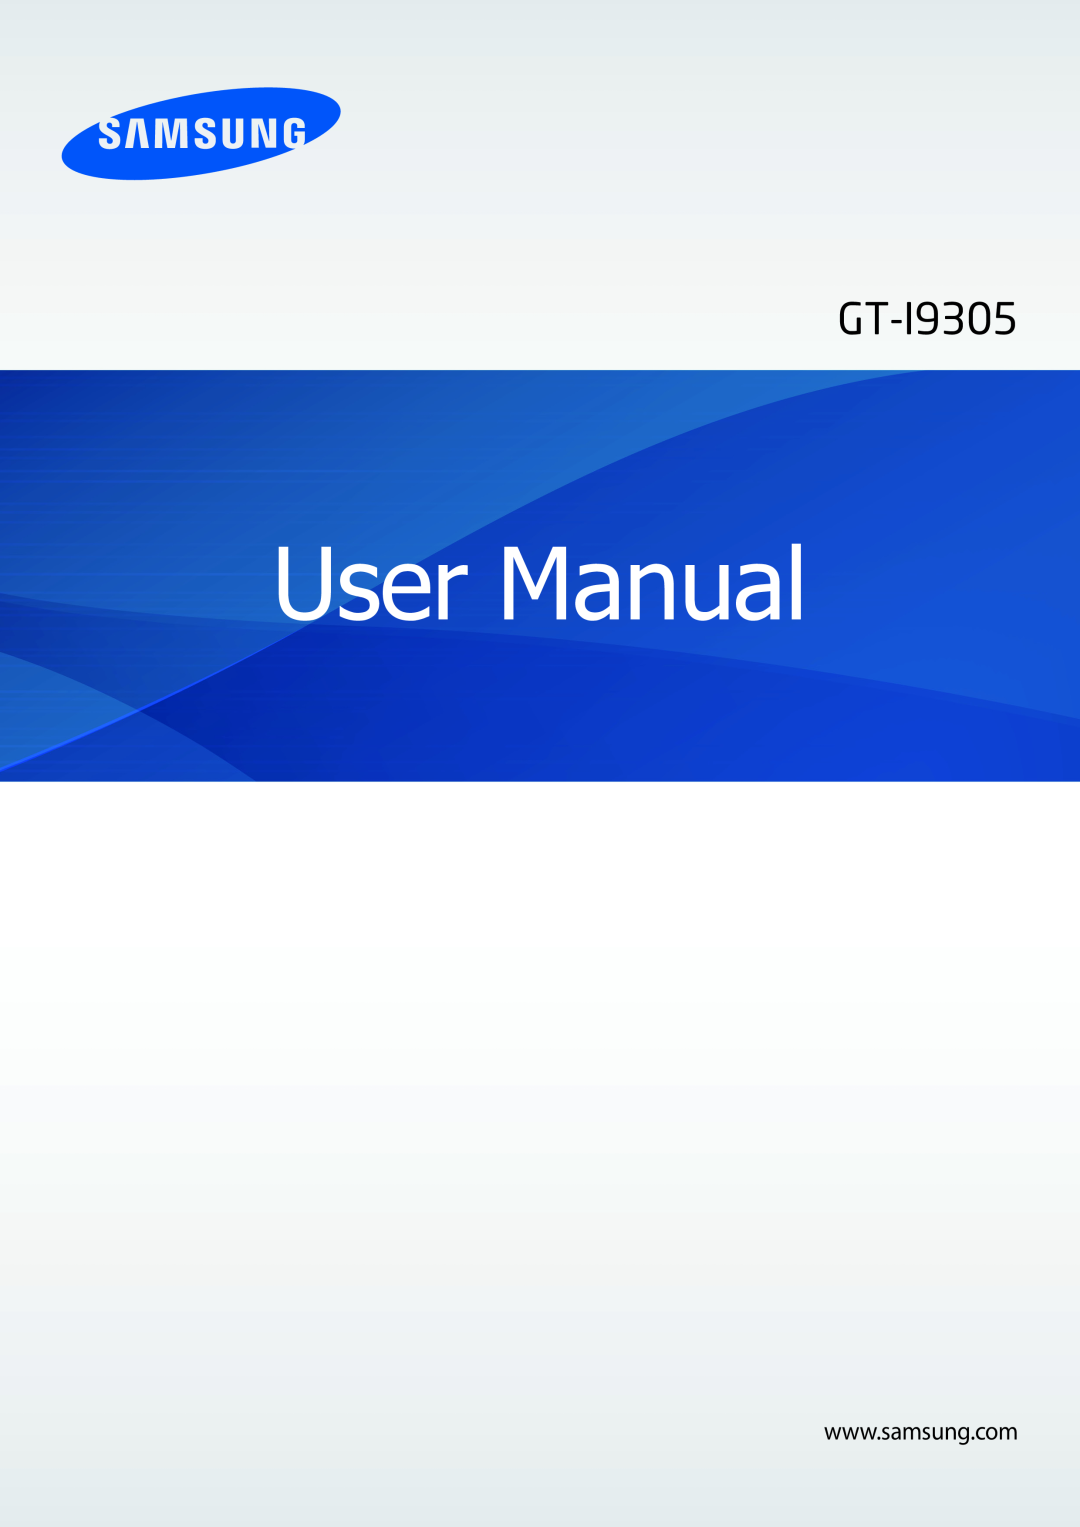 Samsung GT-I9305RWDCOS, GT-I9305OKDTMN, GT-I9305RWDDTM, GT-I9305OKDTPH, GT-I9305MBDXEO, GT-I9305MBDPRT manual User Manual 